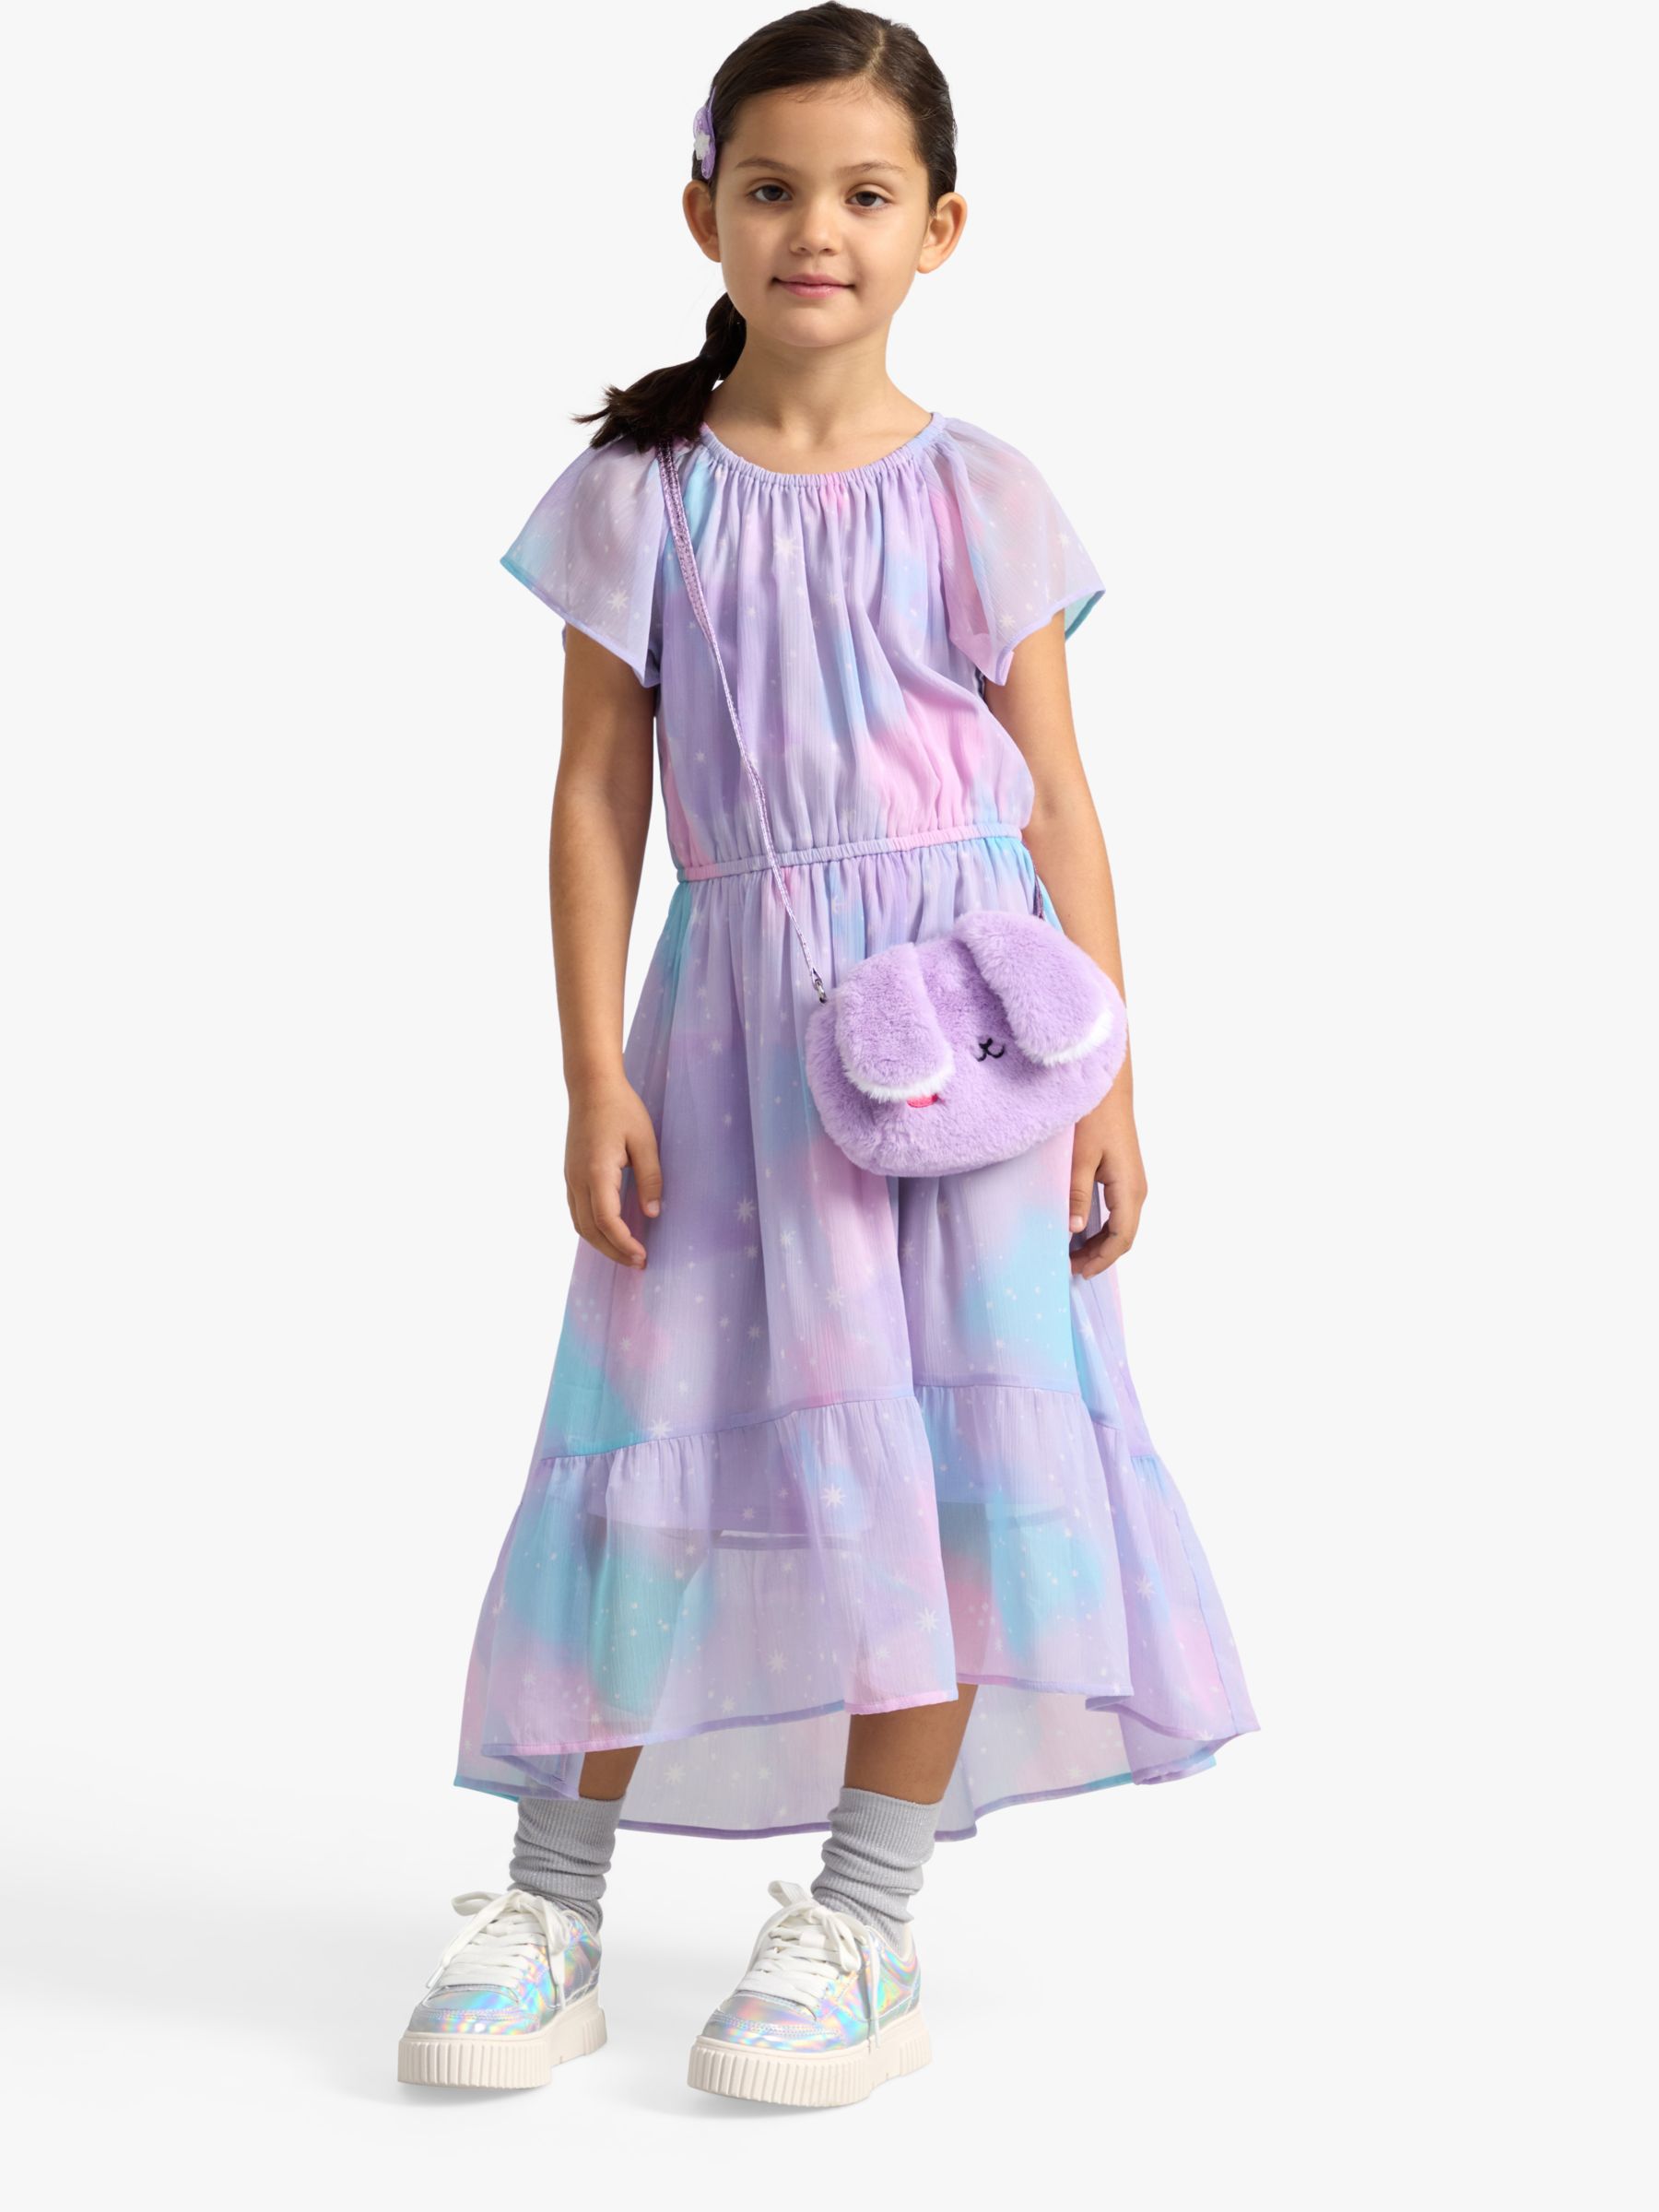 Lindex Kids' Chiffon Star Print Floaty Dress, Light Lilac, 18-24 months